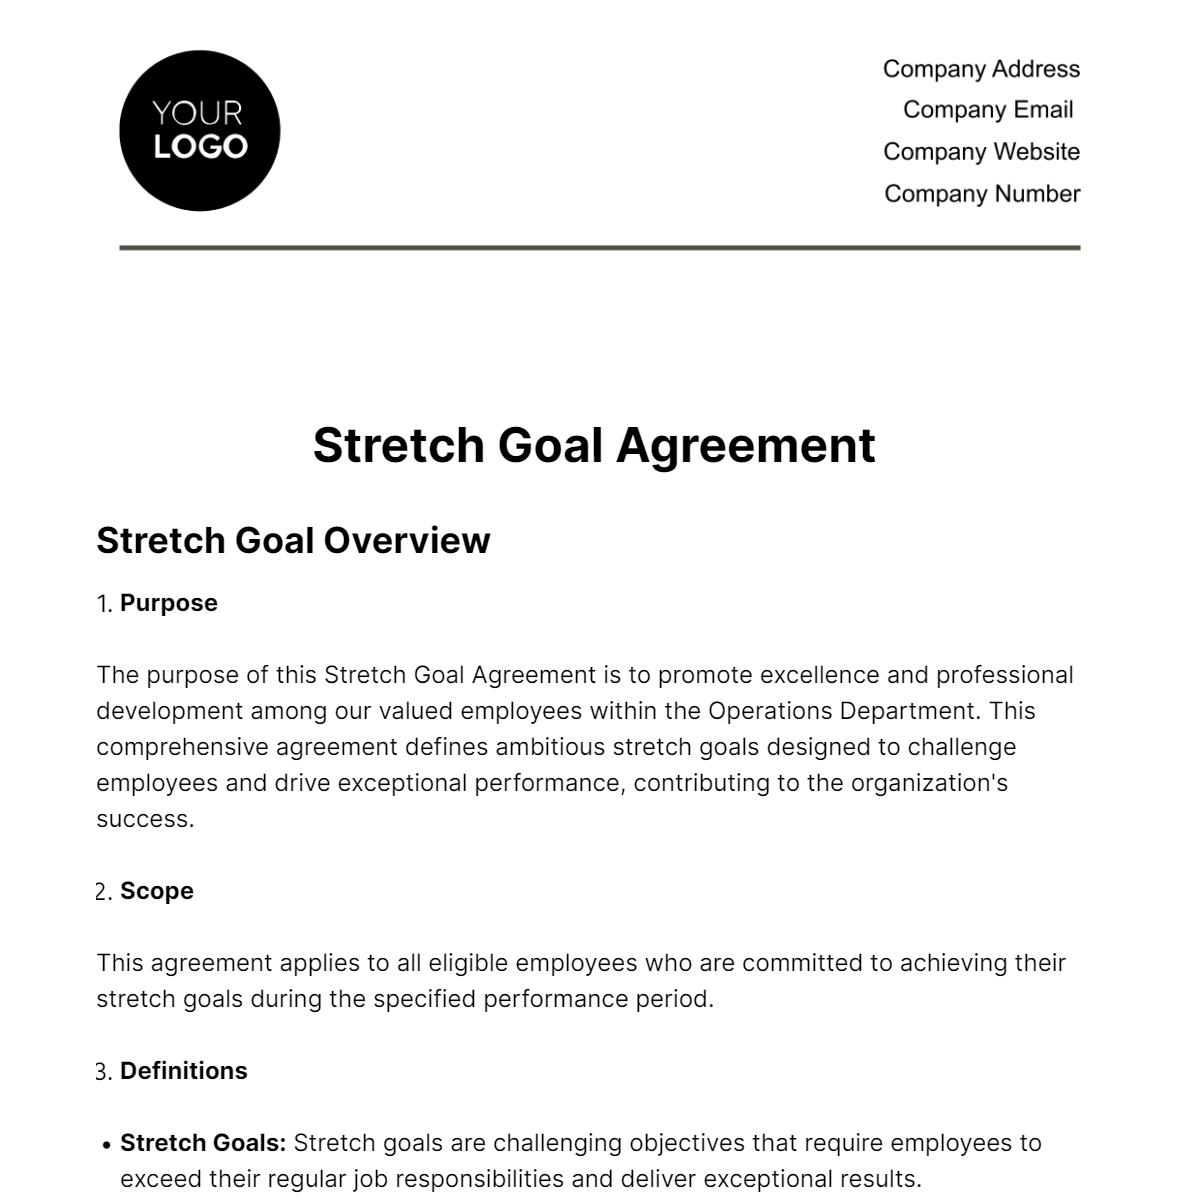 Stretch Goal Agreement HR Template